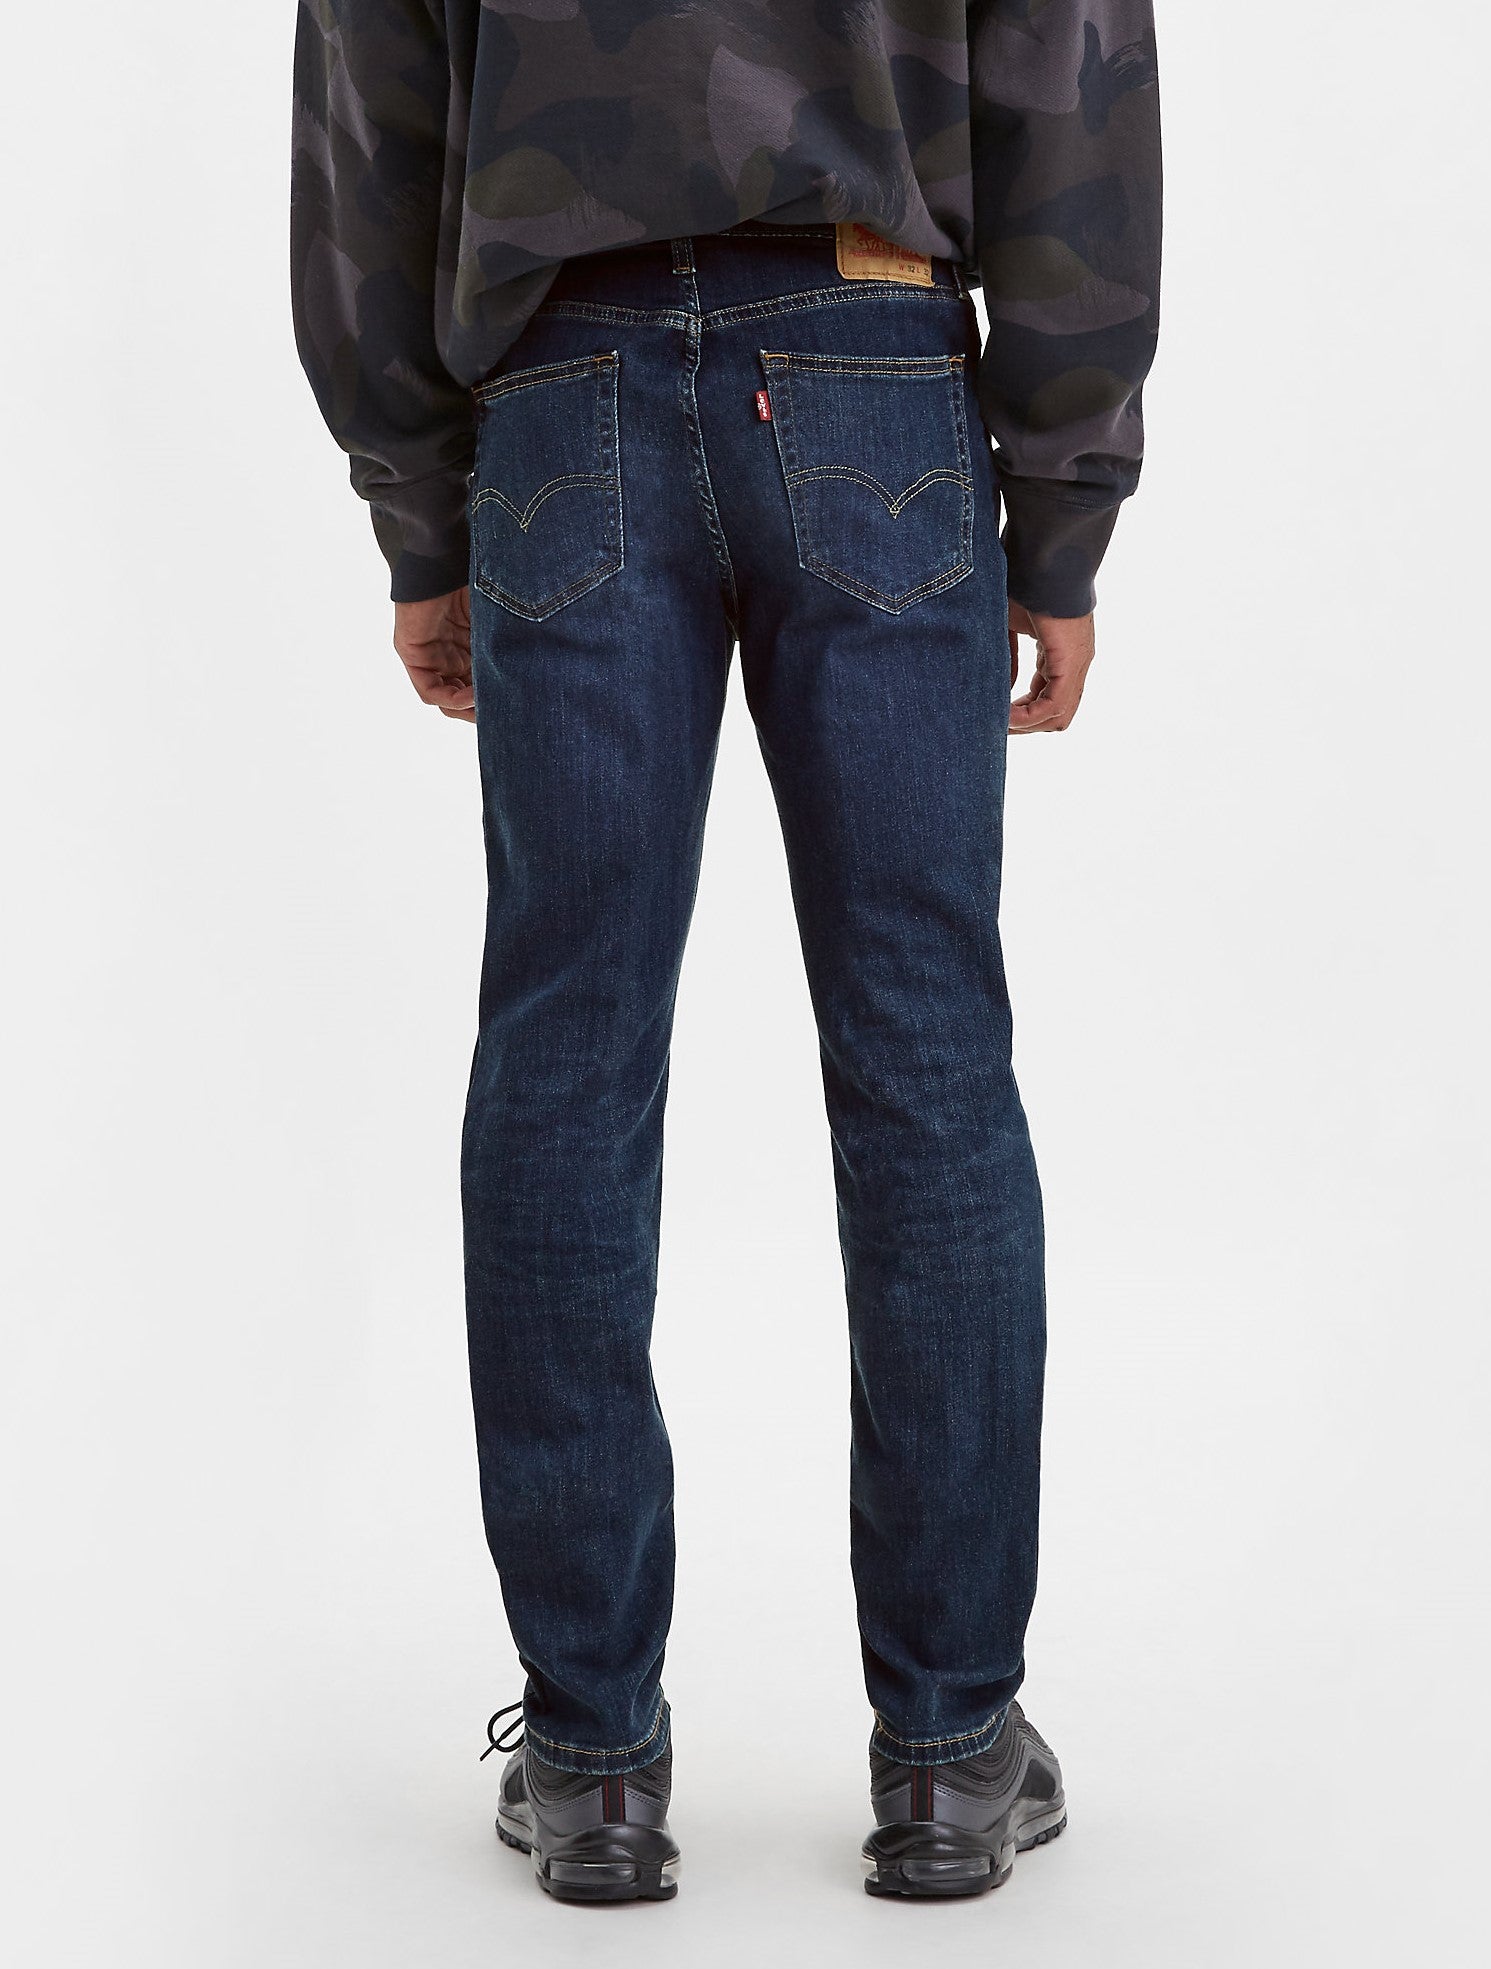 pantalones-jeans-levis-531-athletic-slim-p-caball-2